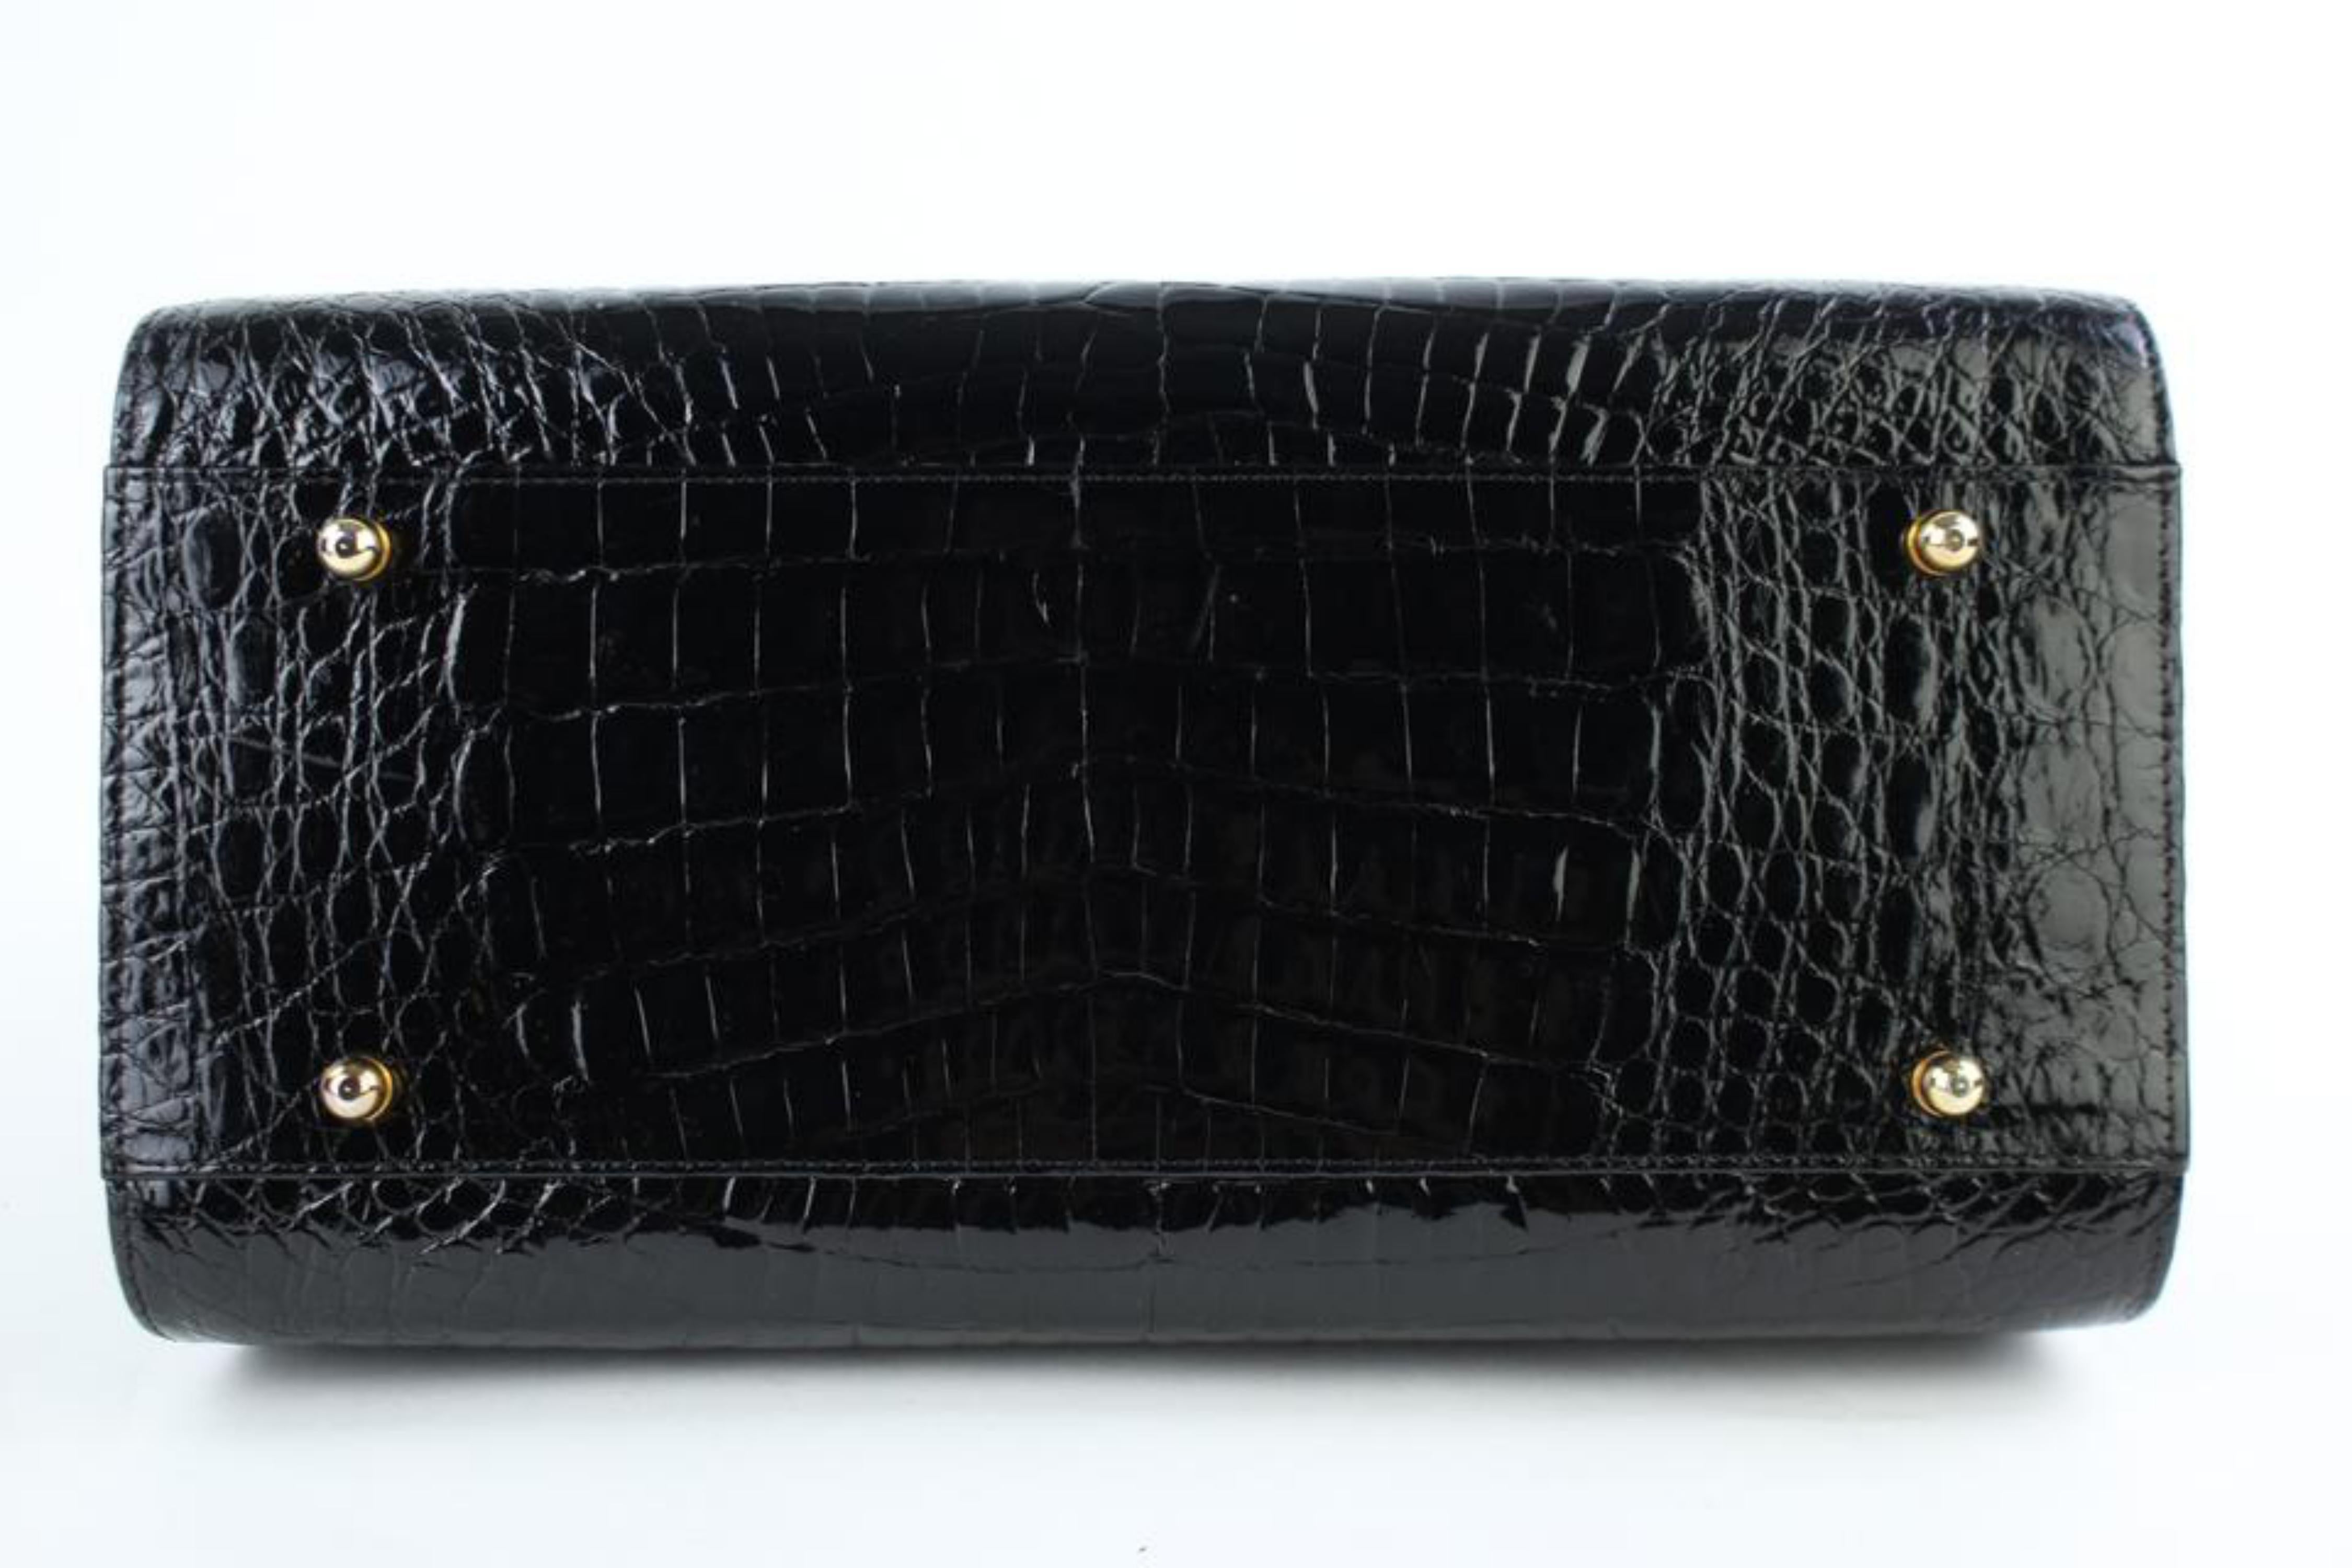 Crocodile Crossbody Kelly 12mt922 Black Leather Satchel For Sale 5